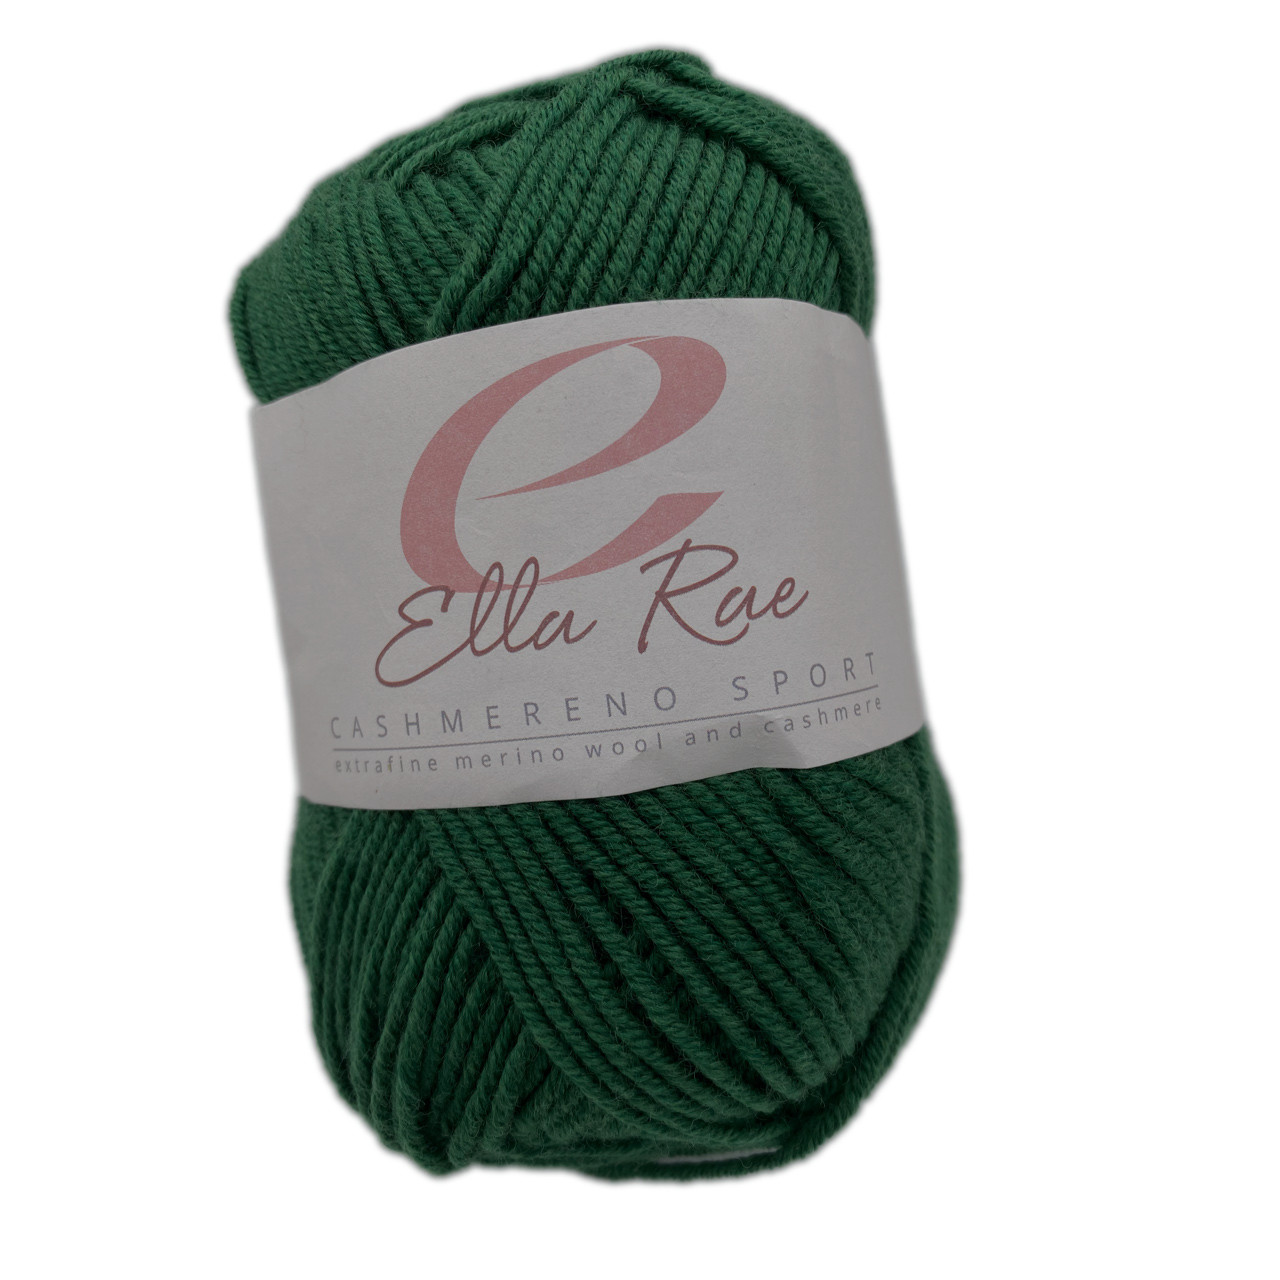 Beginning Crochet Kit (Basic)  Ella Rae Cashmereno & The Crochet